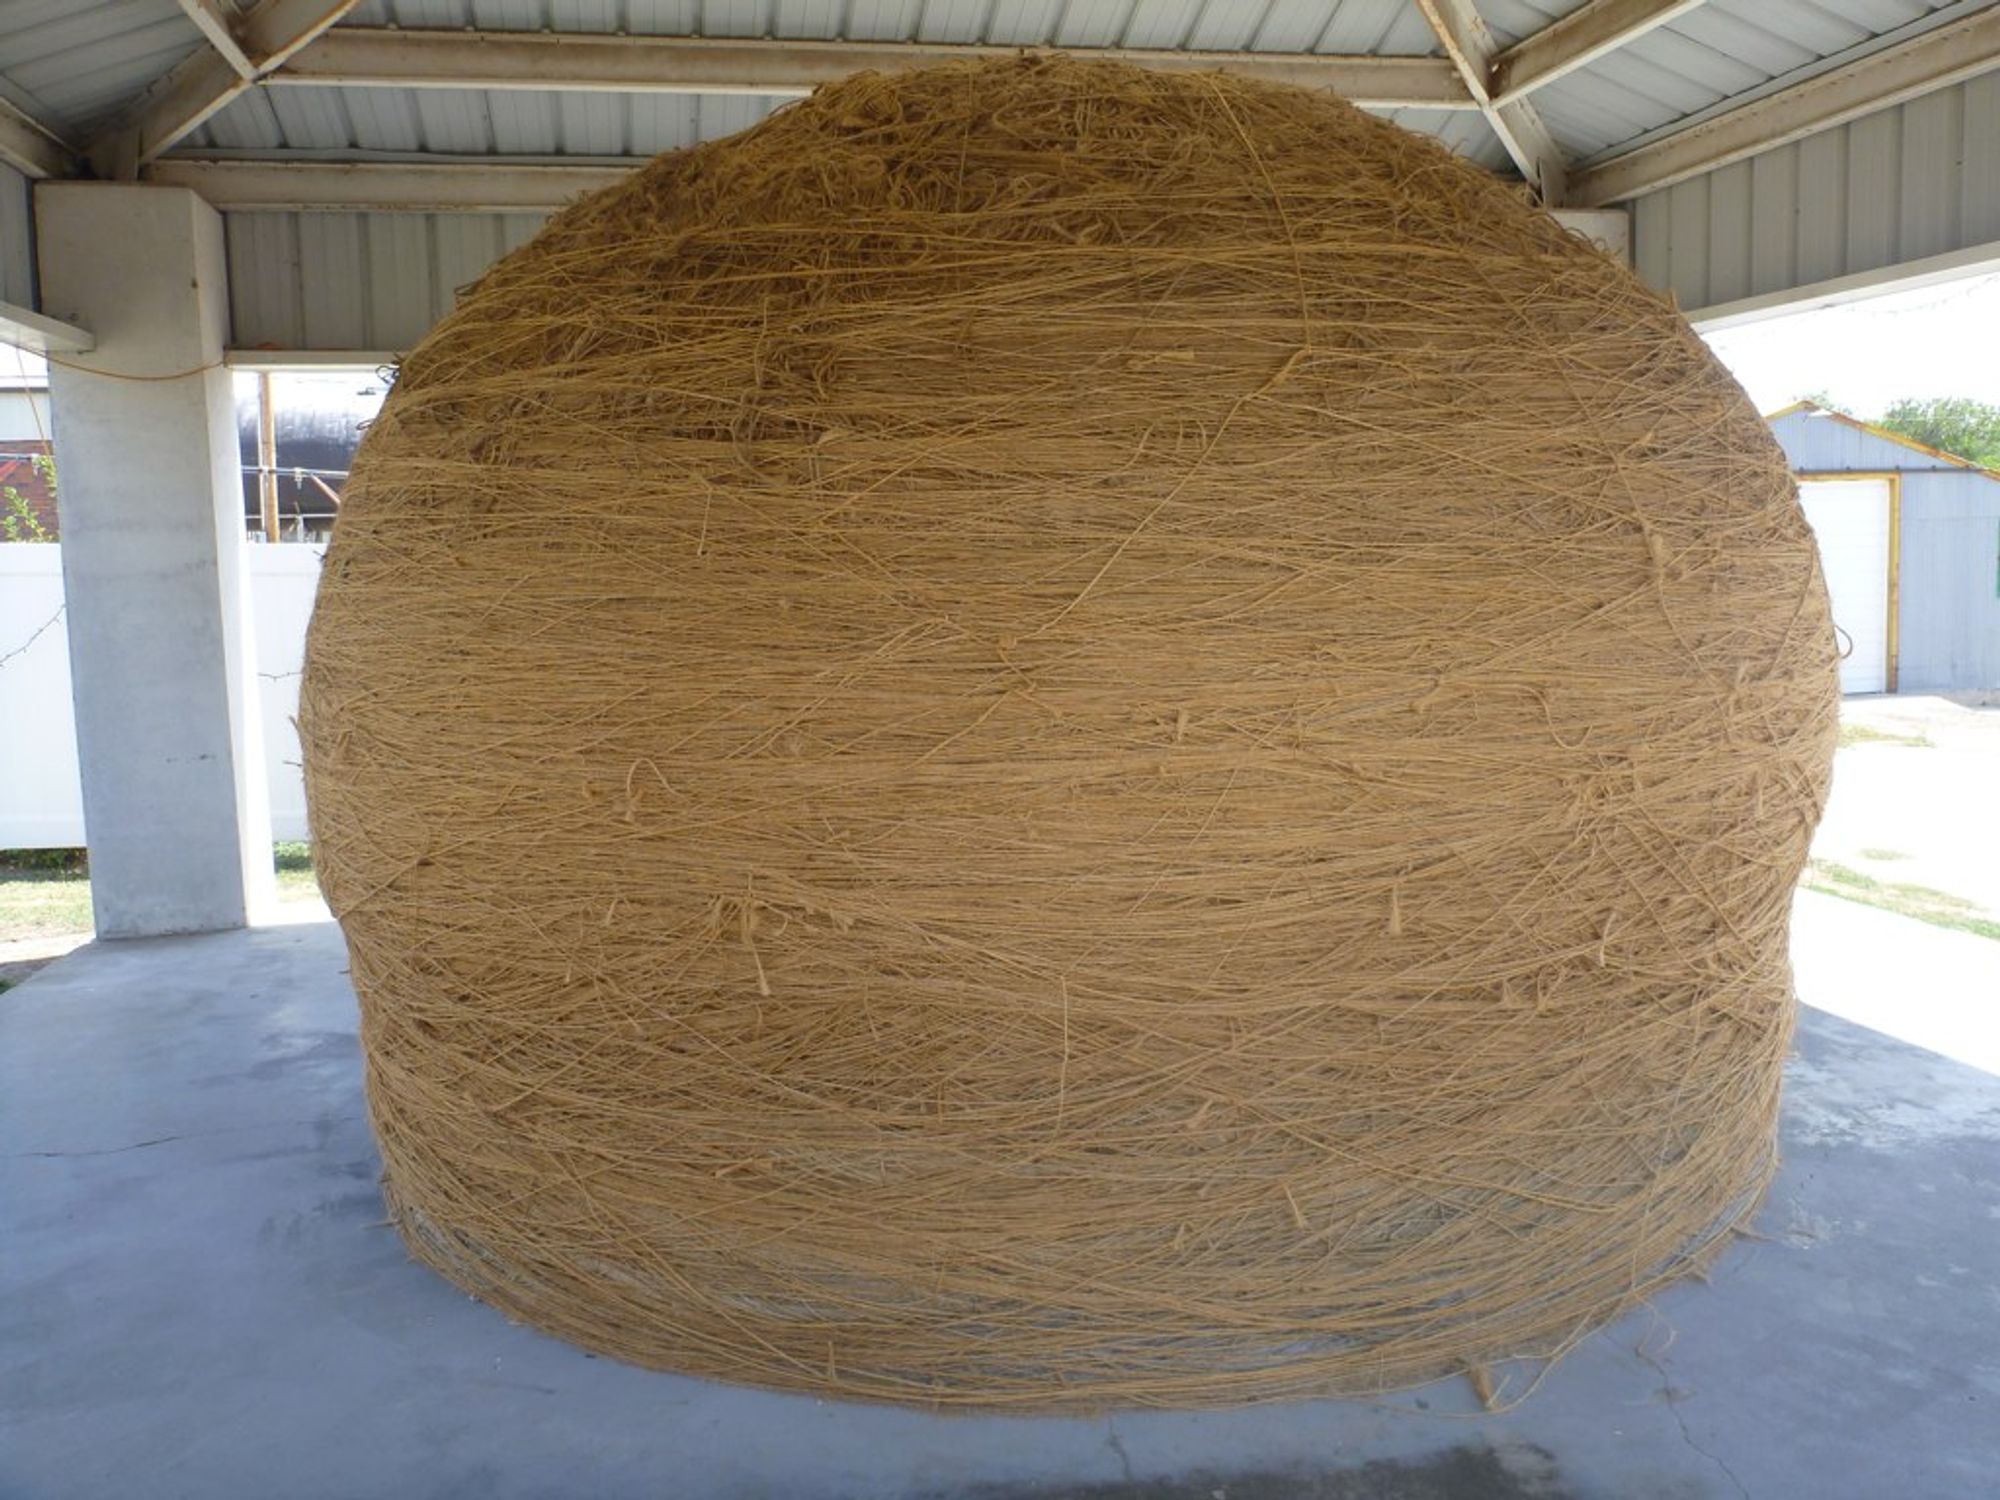 World's Largest Balls of Twine